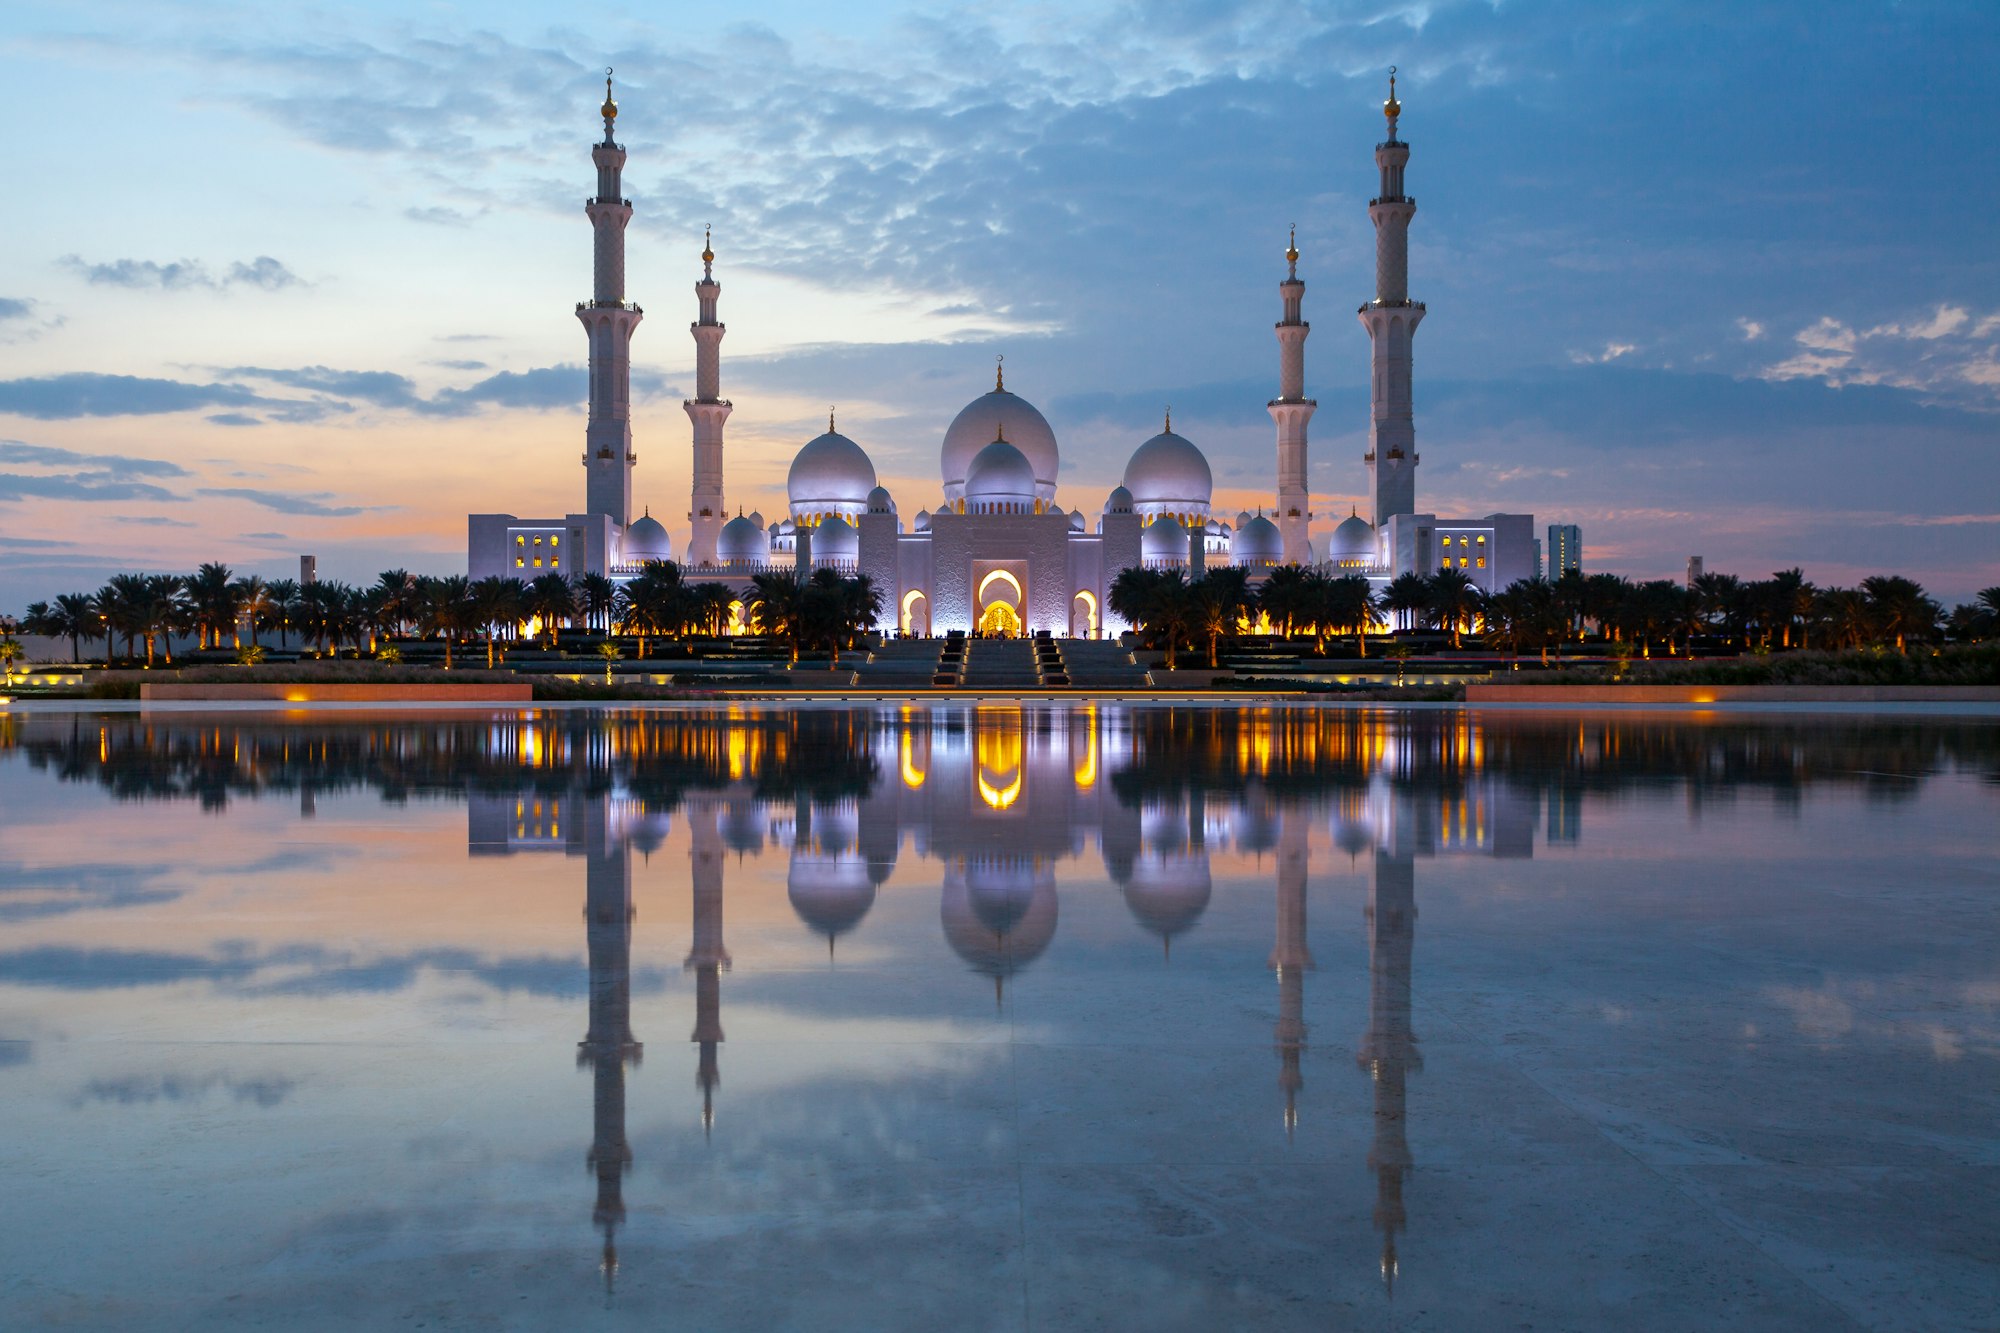 Sheikh Zayed Grand Mosque, Abu Dhabi at dusk